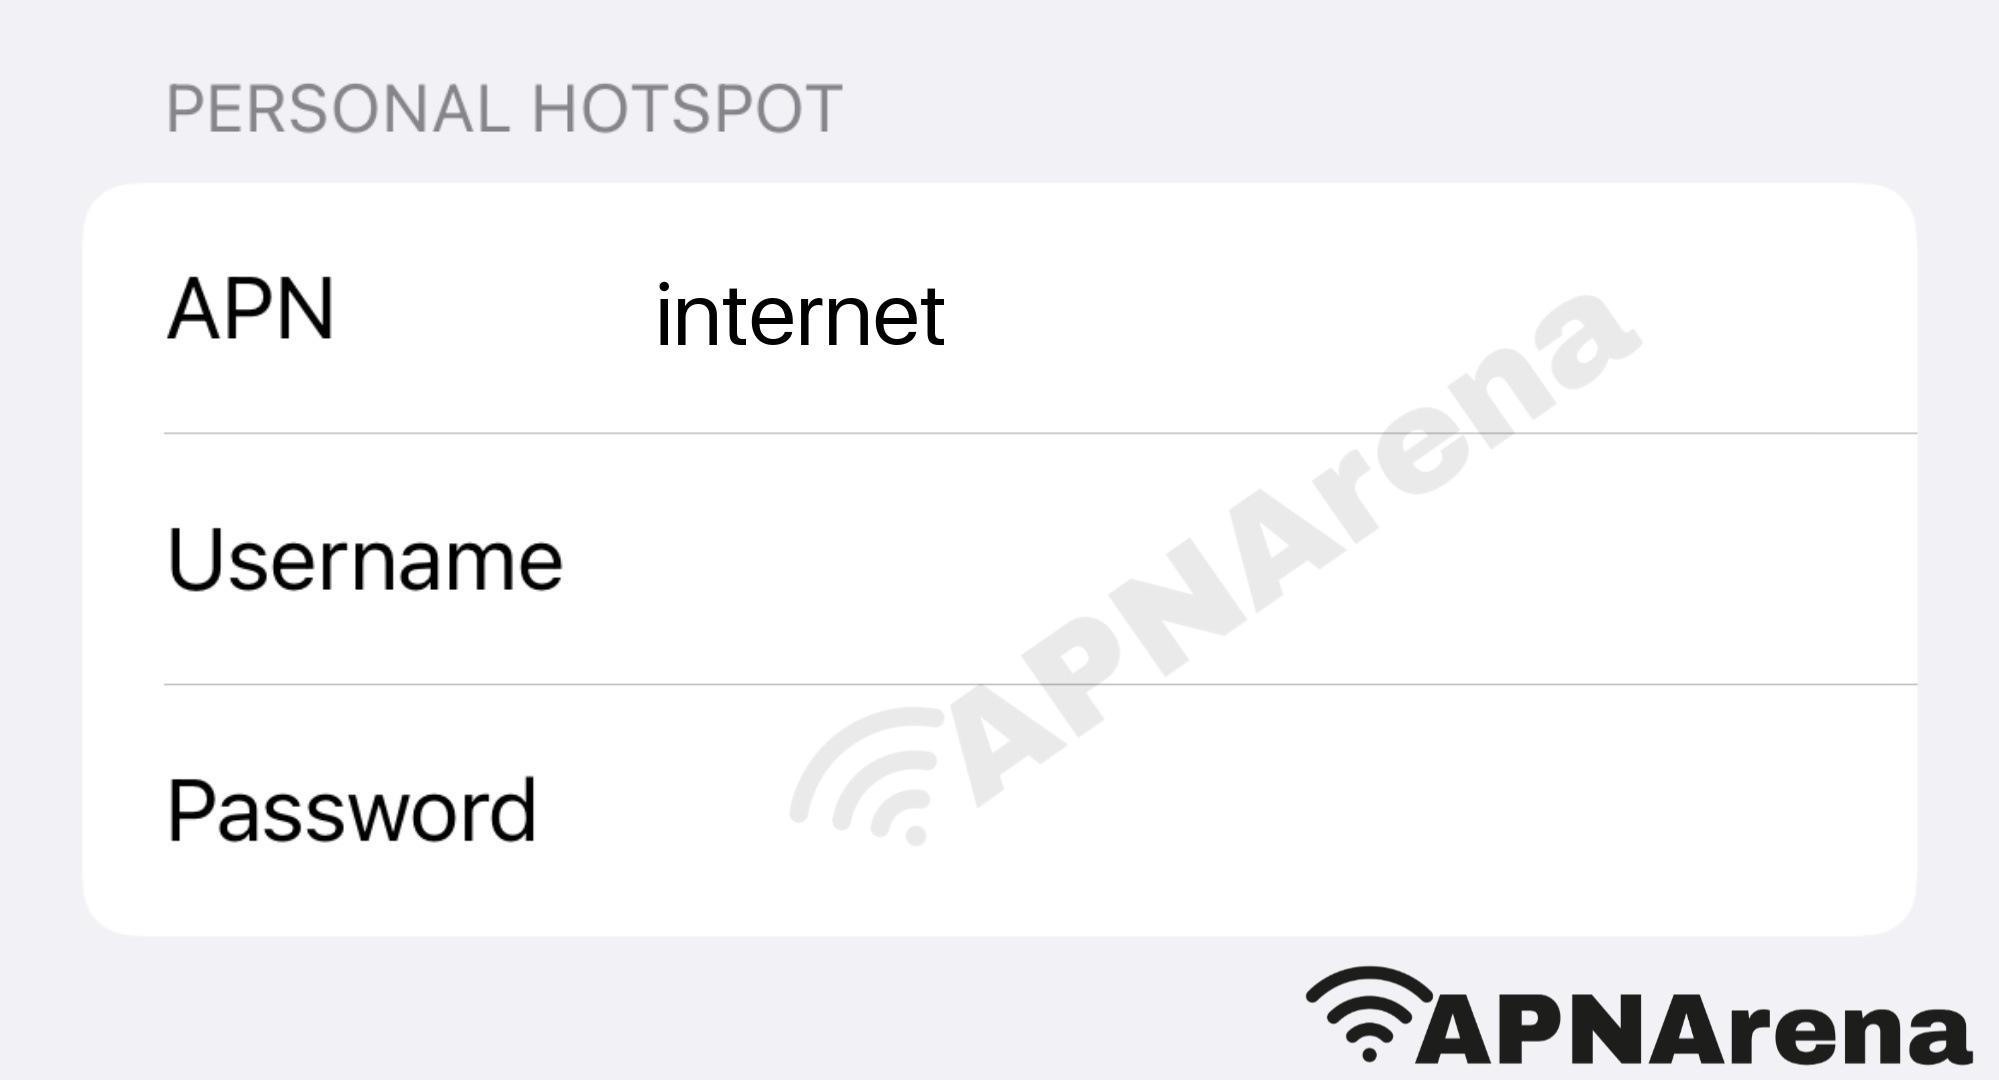 Vodafone Spain (Airtel) Personal Hotspot Settings for iPhone